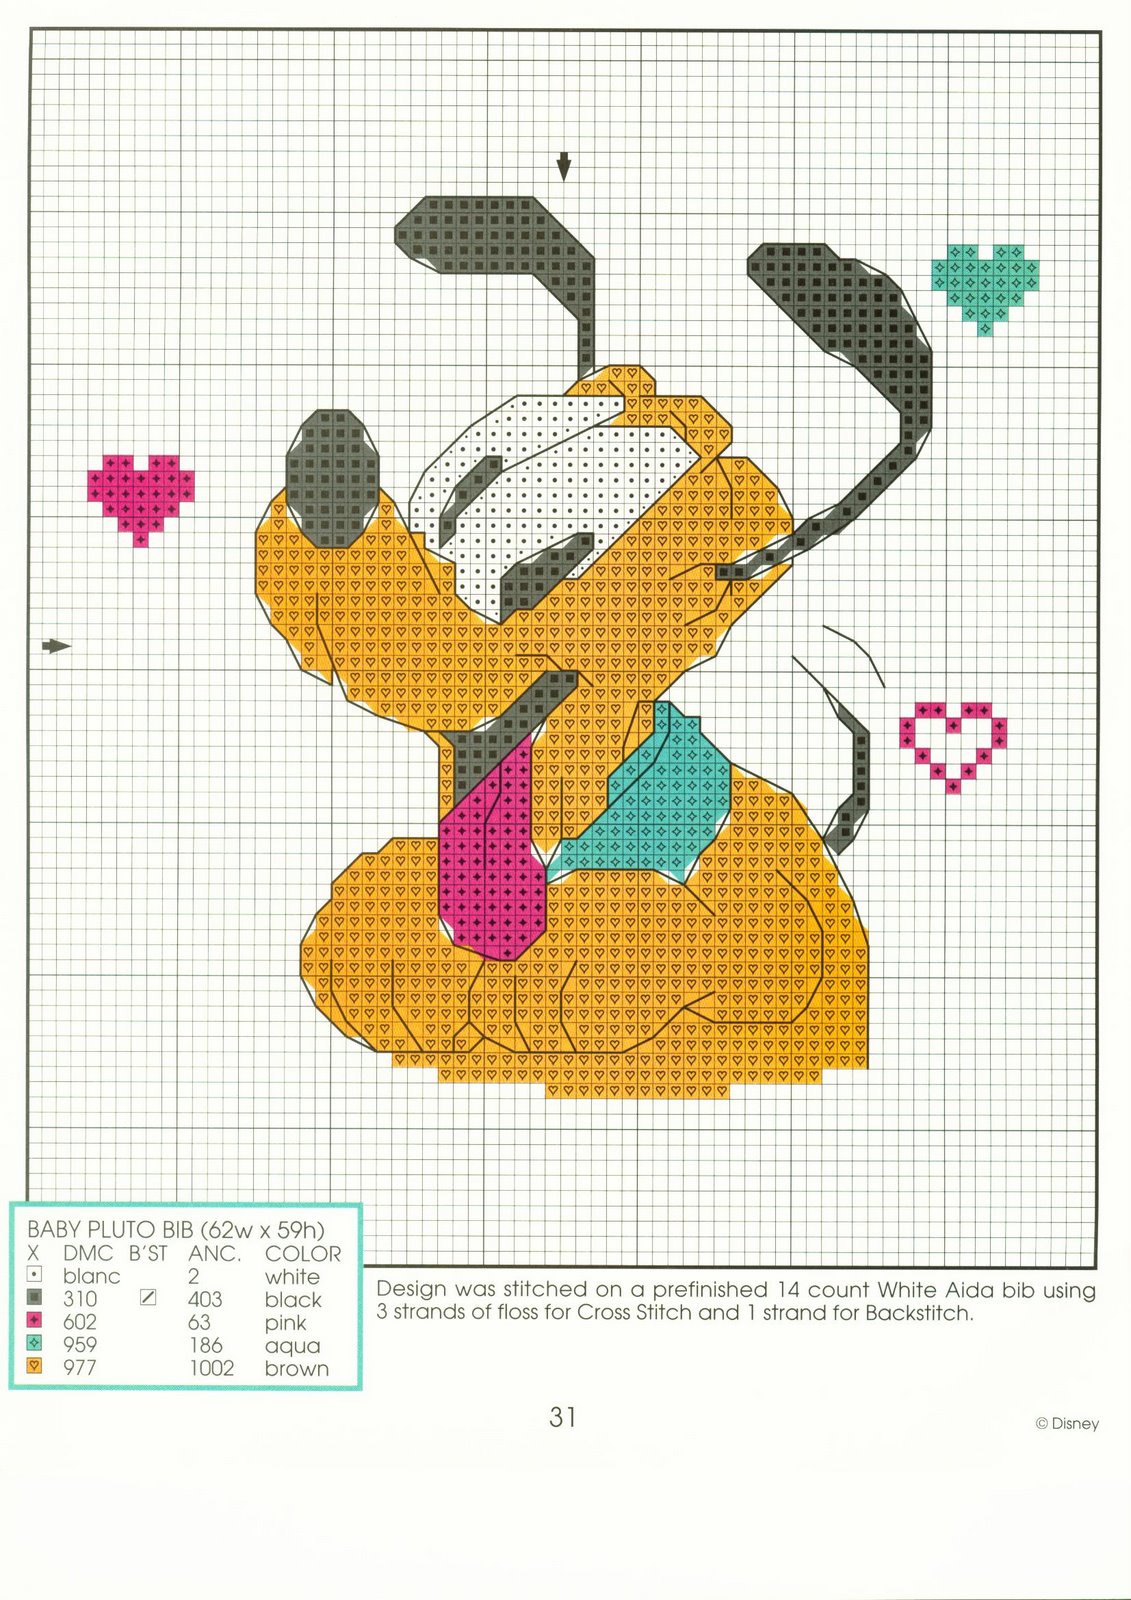 Cross stitch patterns to download Disney (12)